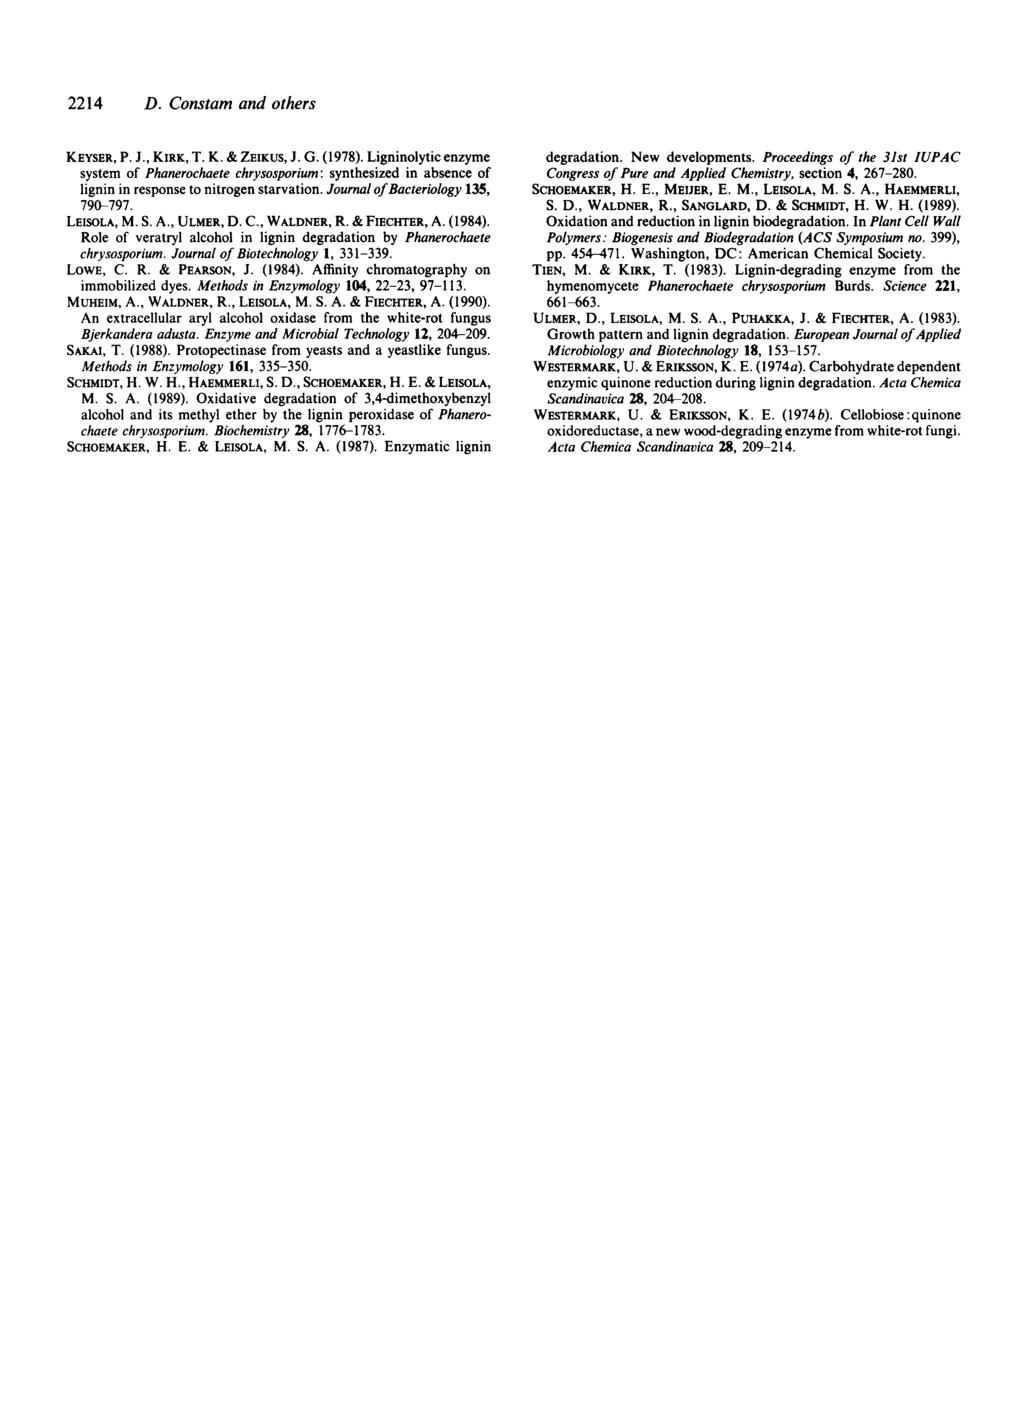 2214 D. Constam and others KEYSER, P. J., KIRK, T. K. & ZEIKUS, J. G. (1978).